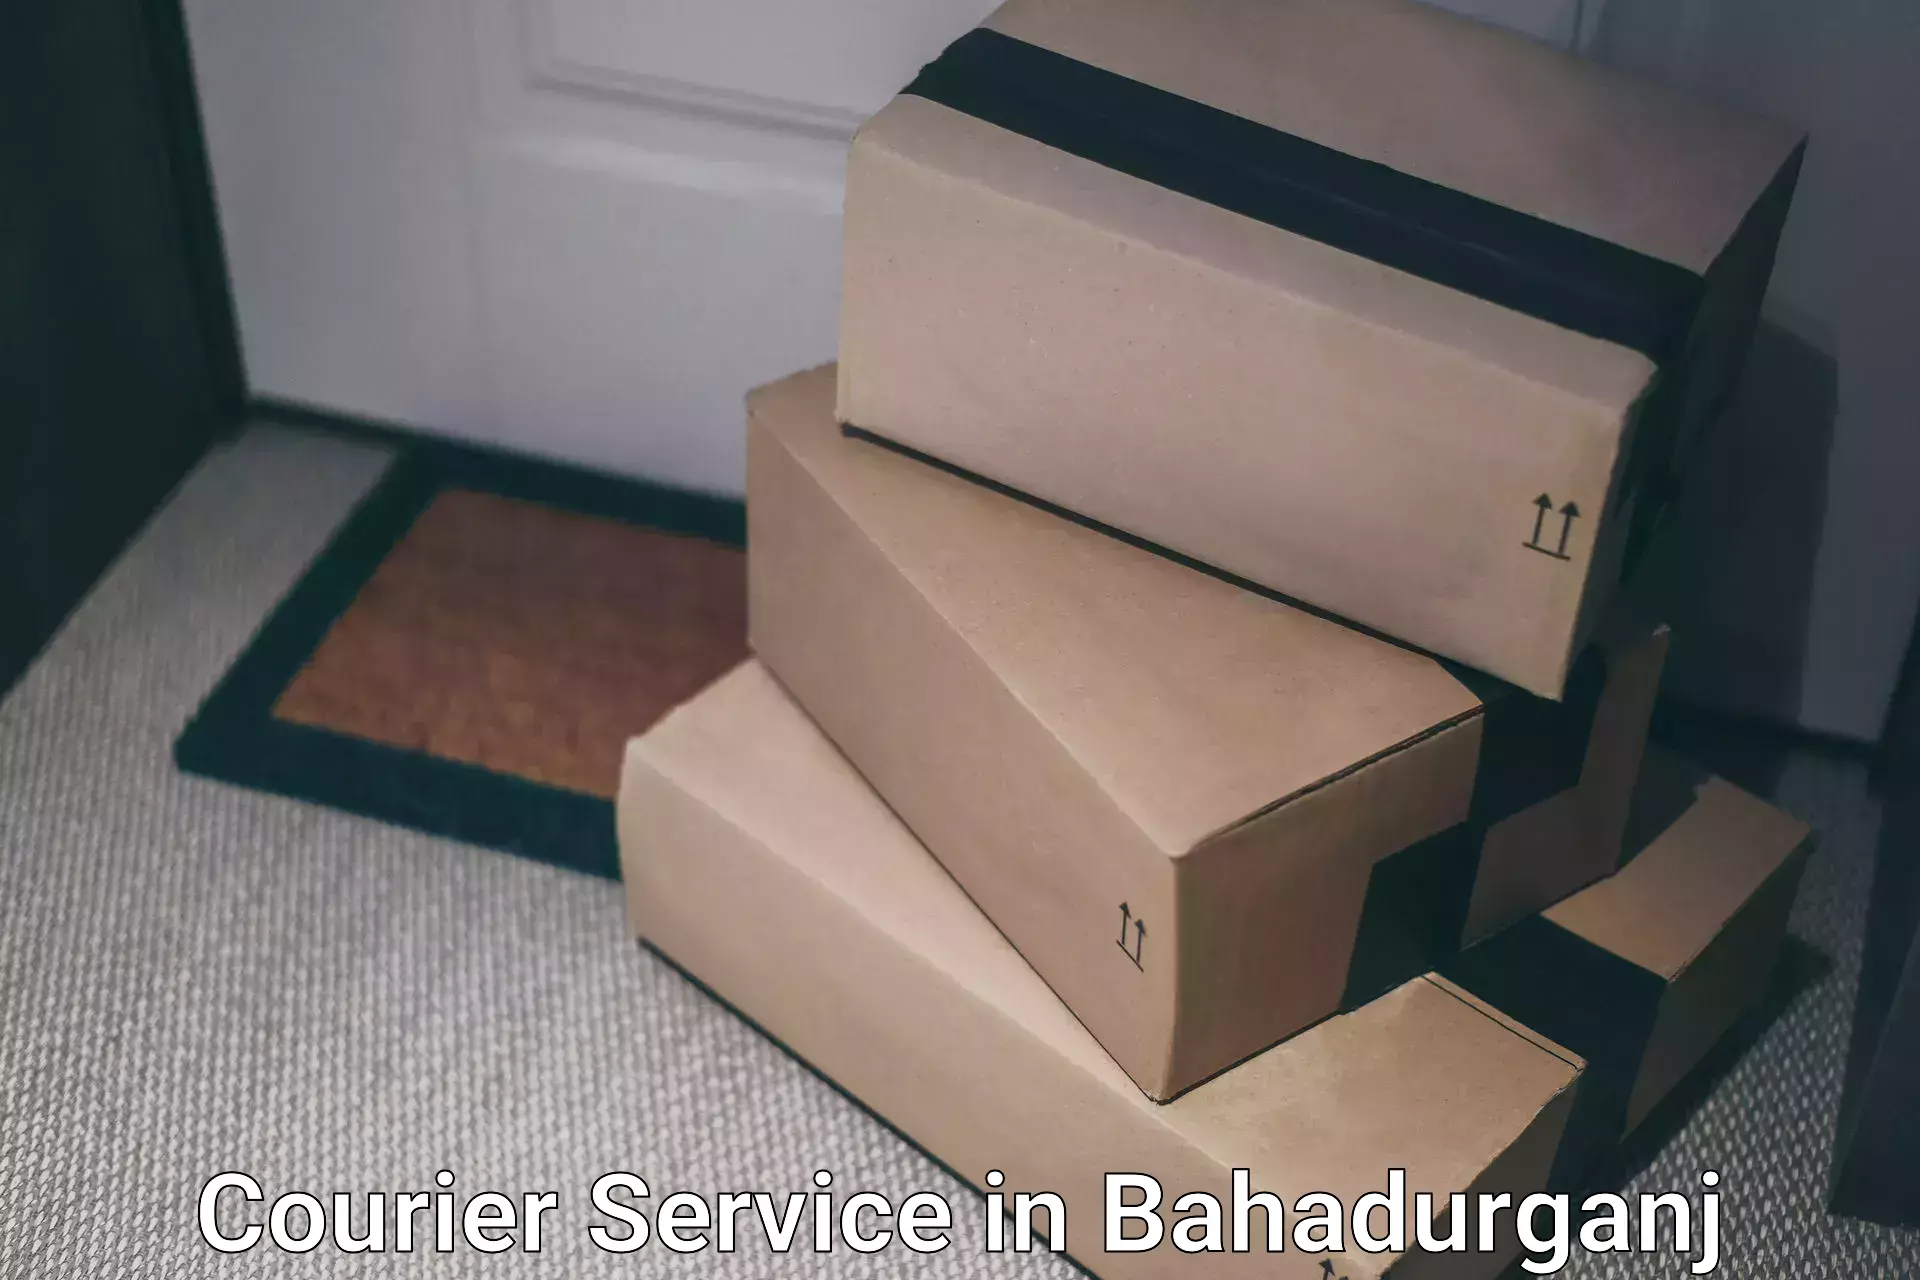 Nationwide delivery network in Bahadurganj